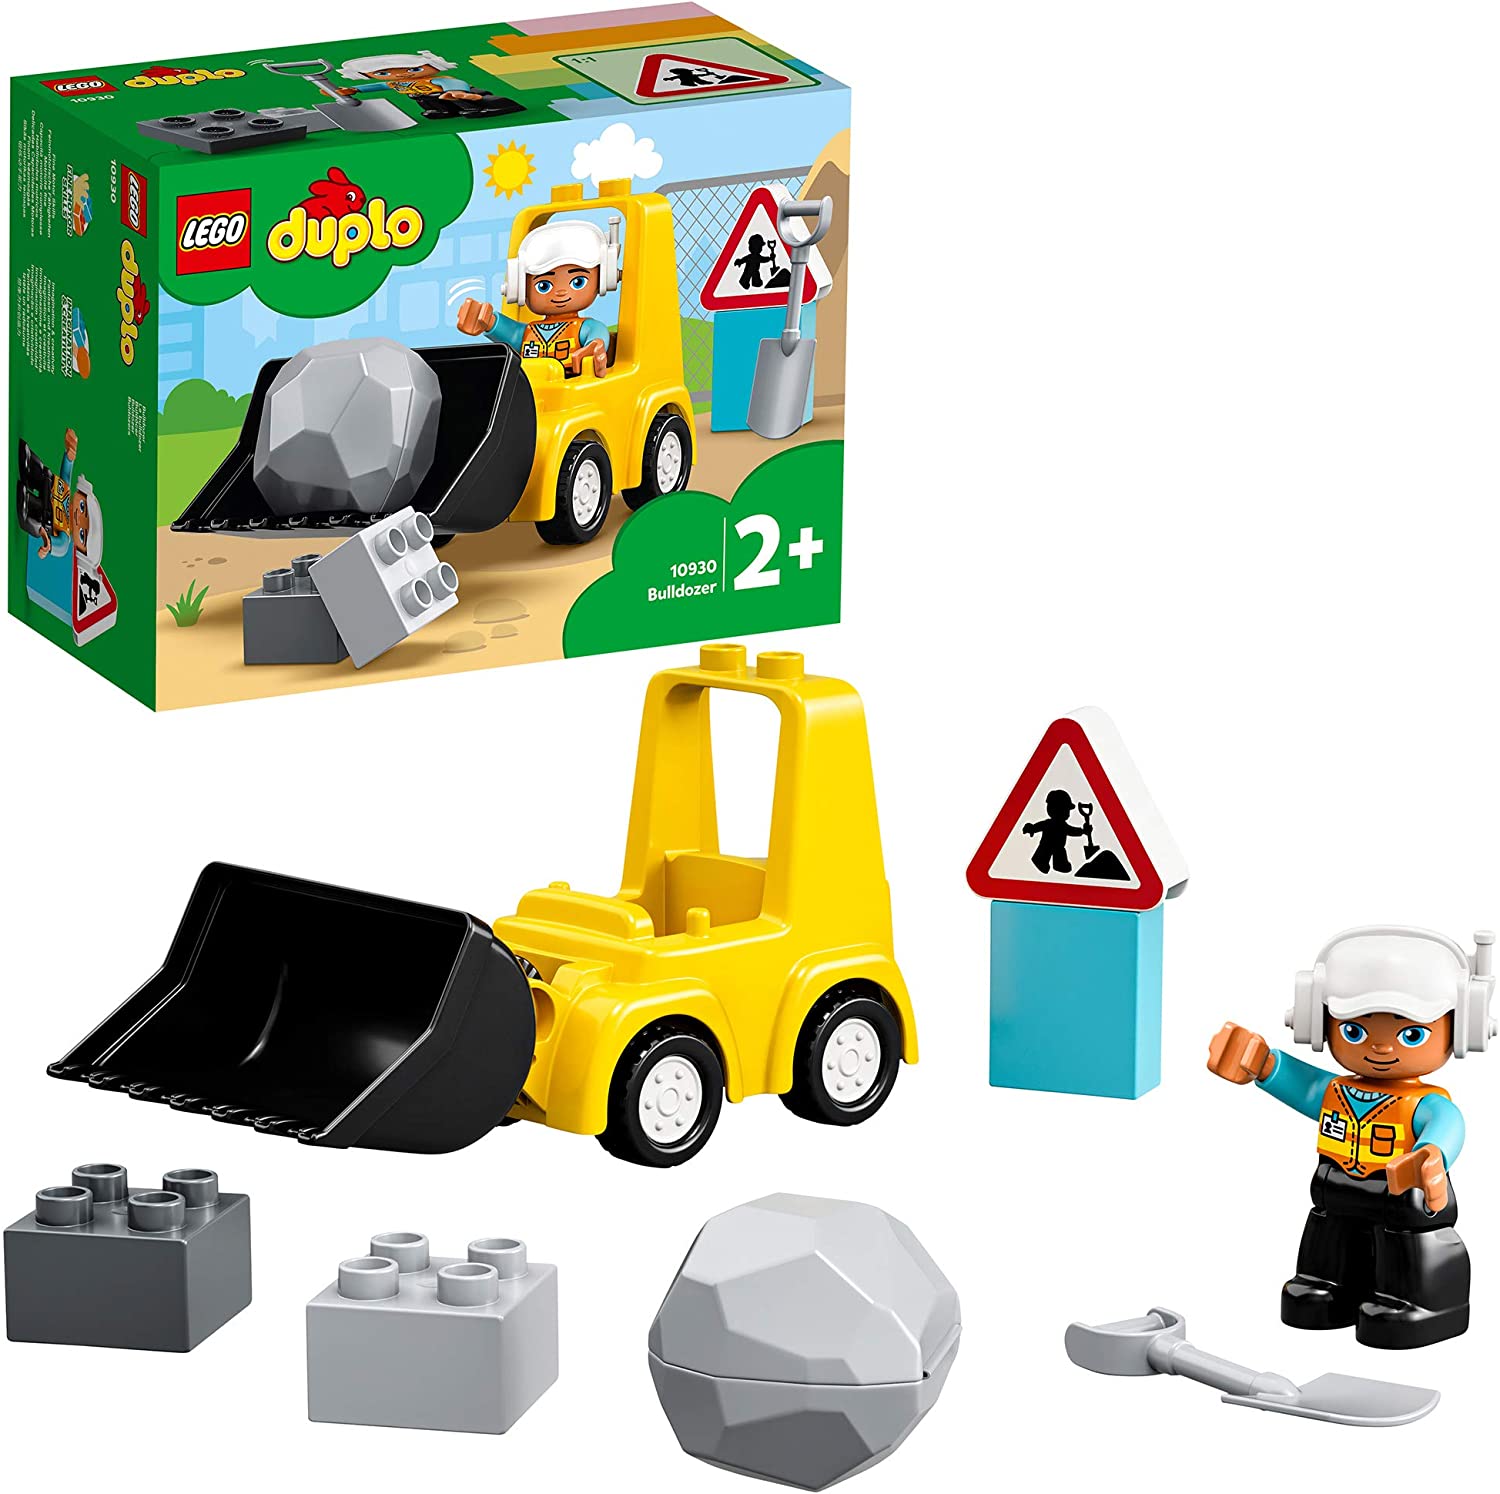 Lego 10930 Duplo Bulldozer Construction Vehicle Toy Set For Small Children 